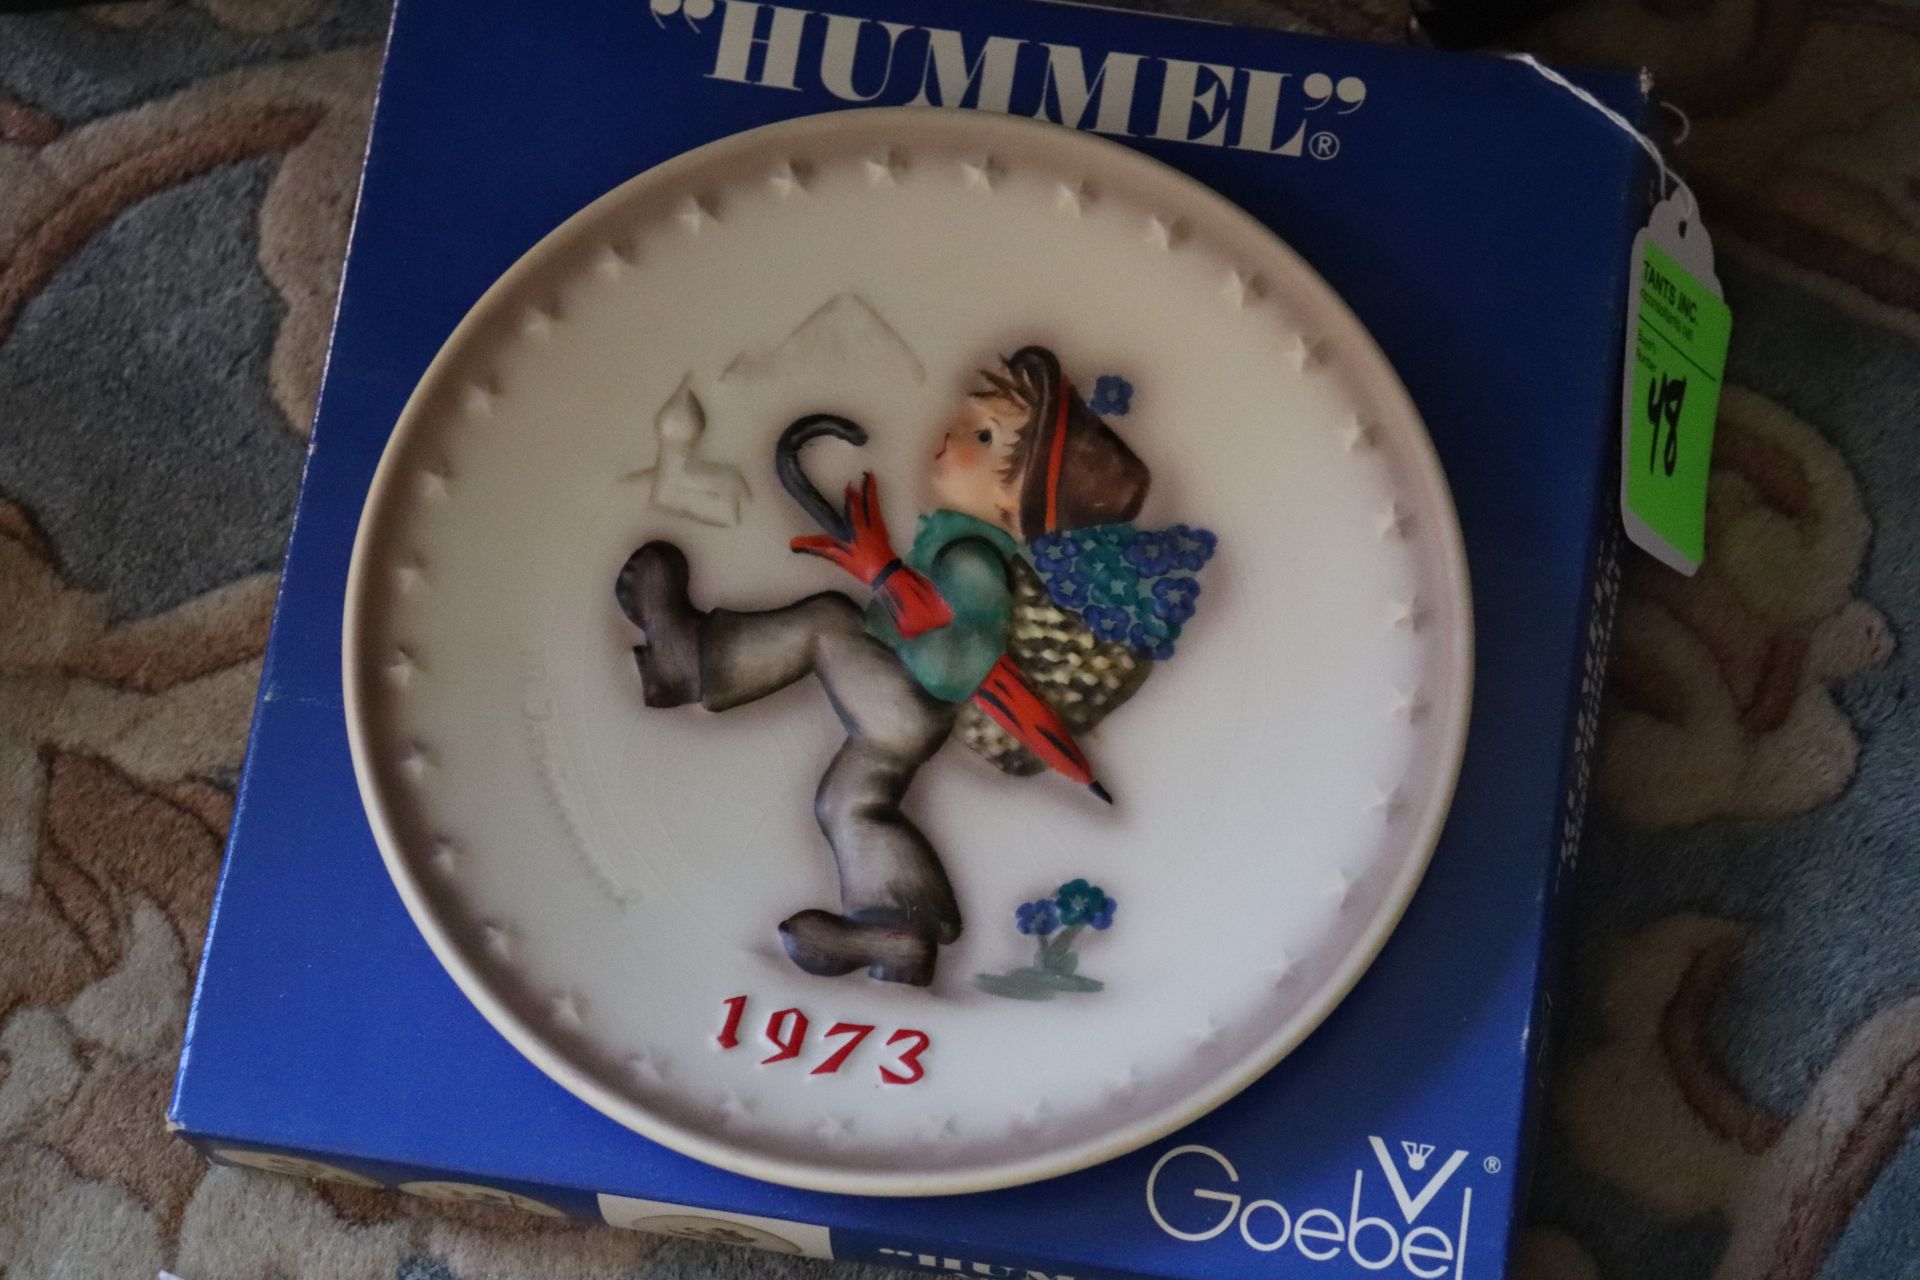 Hummel Christmas ediiton plate, 1973